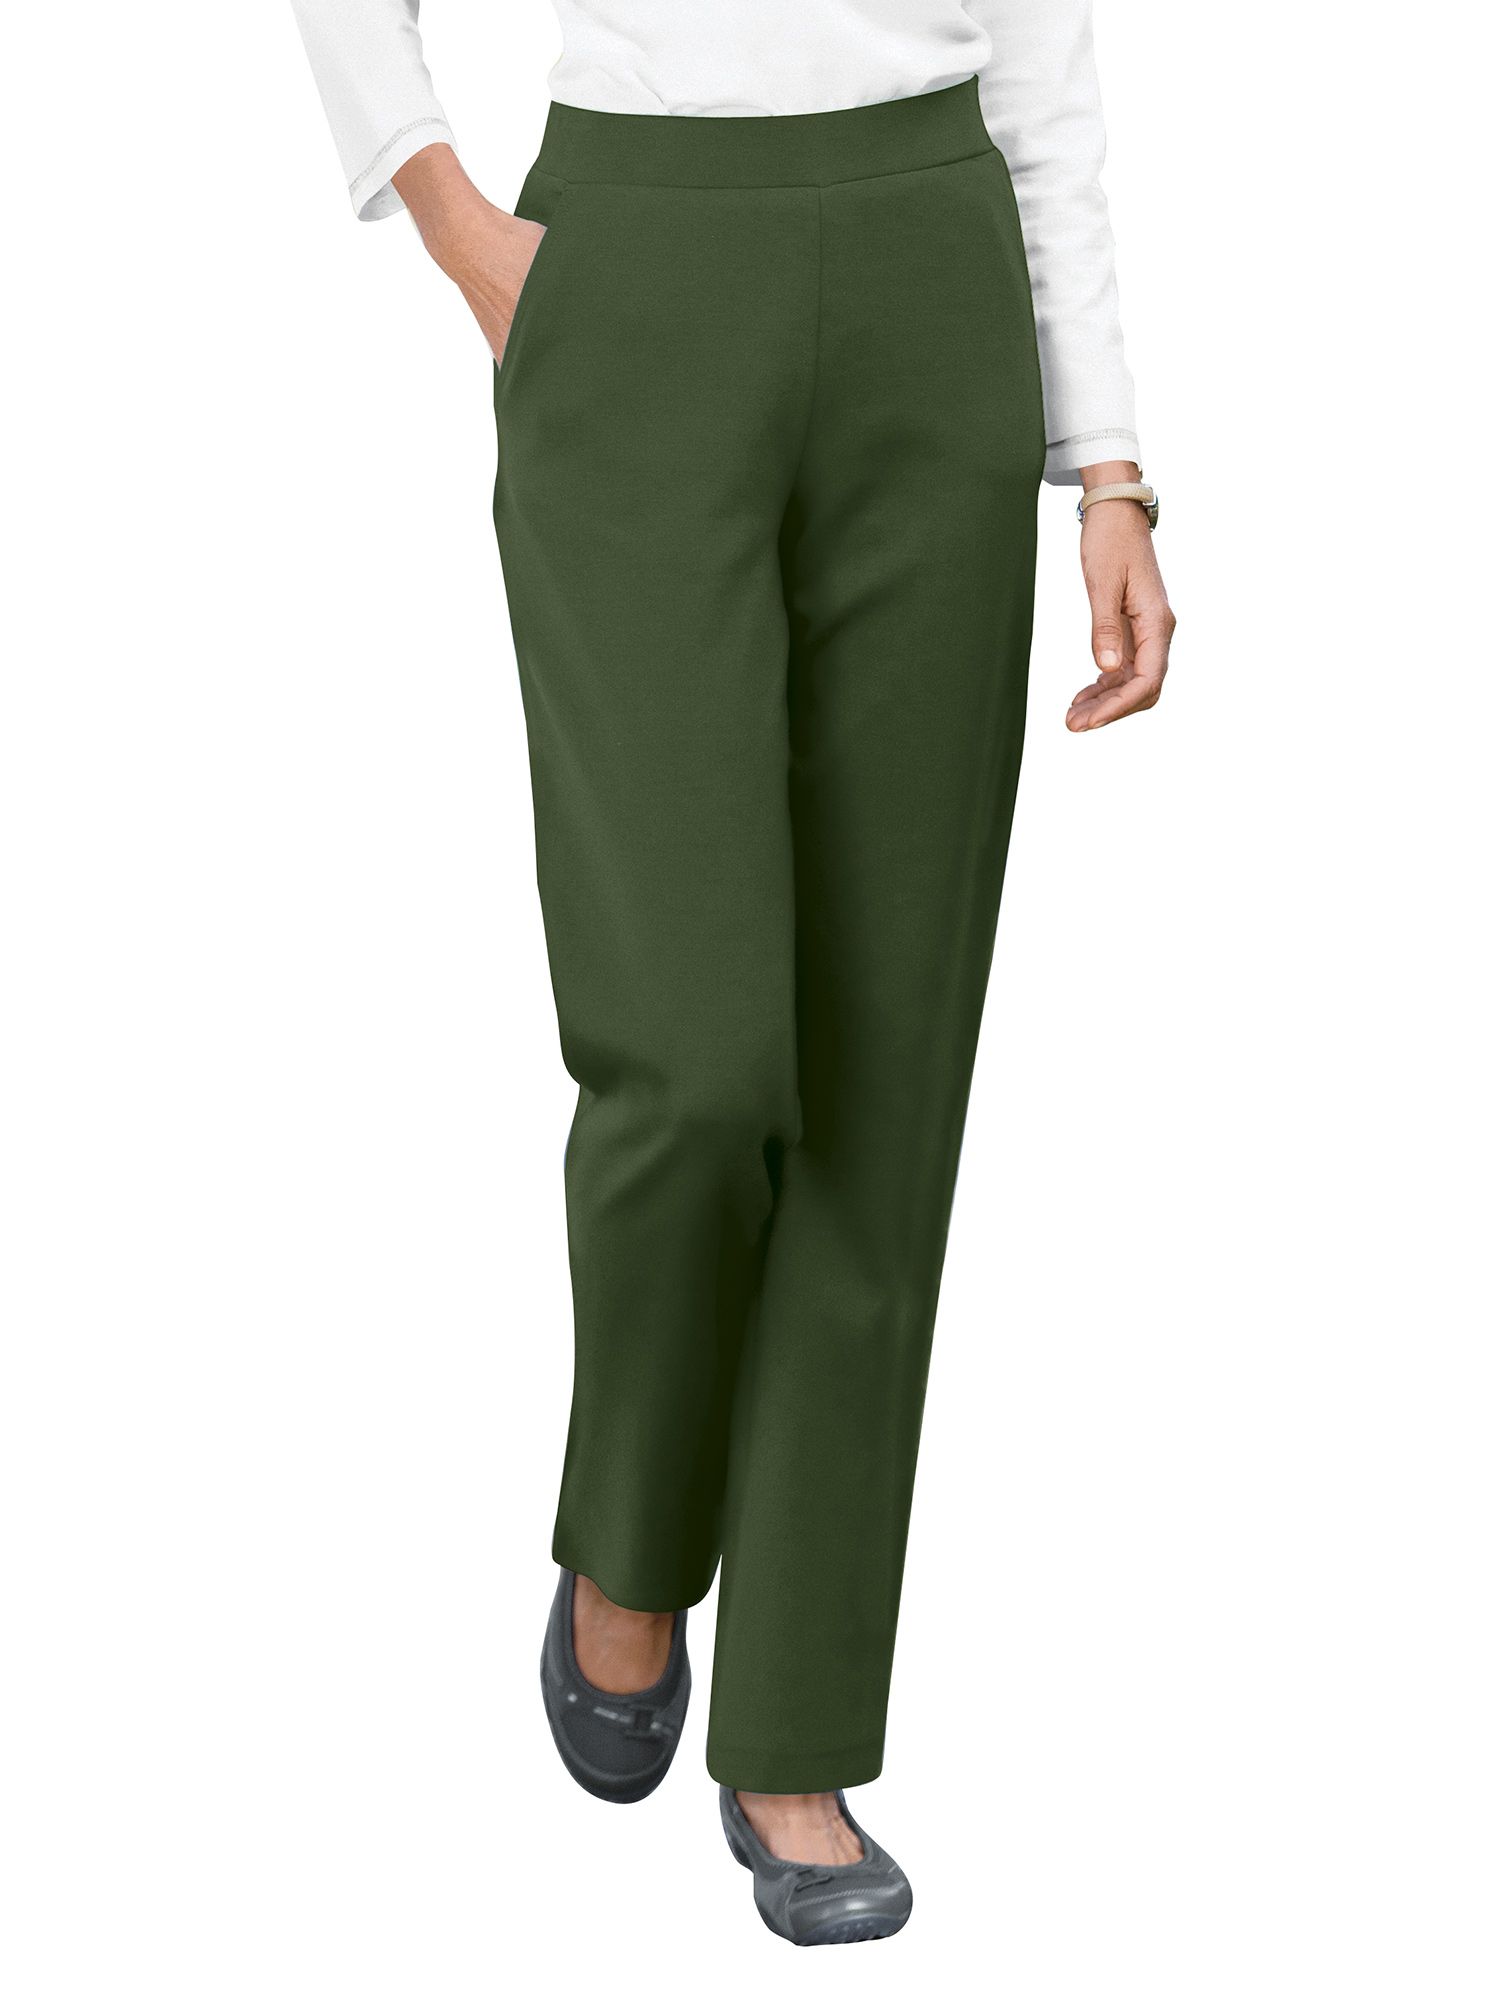 Women's Elastic Waist Pants & Pull on Pants | Appleseed's